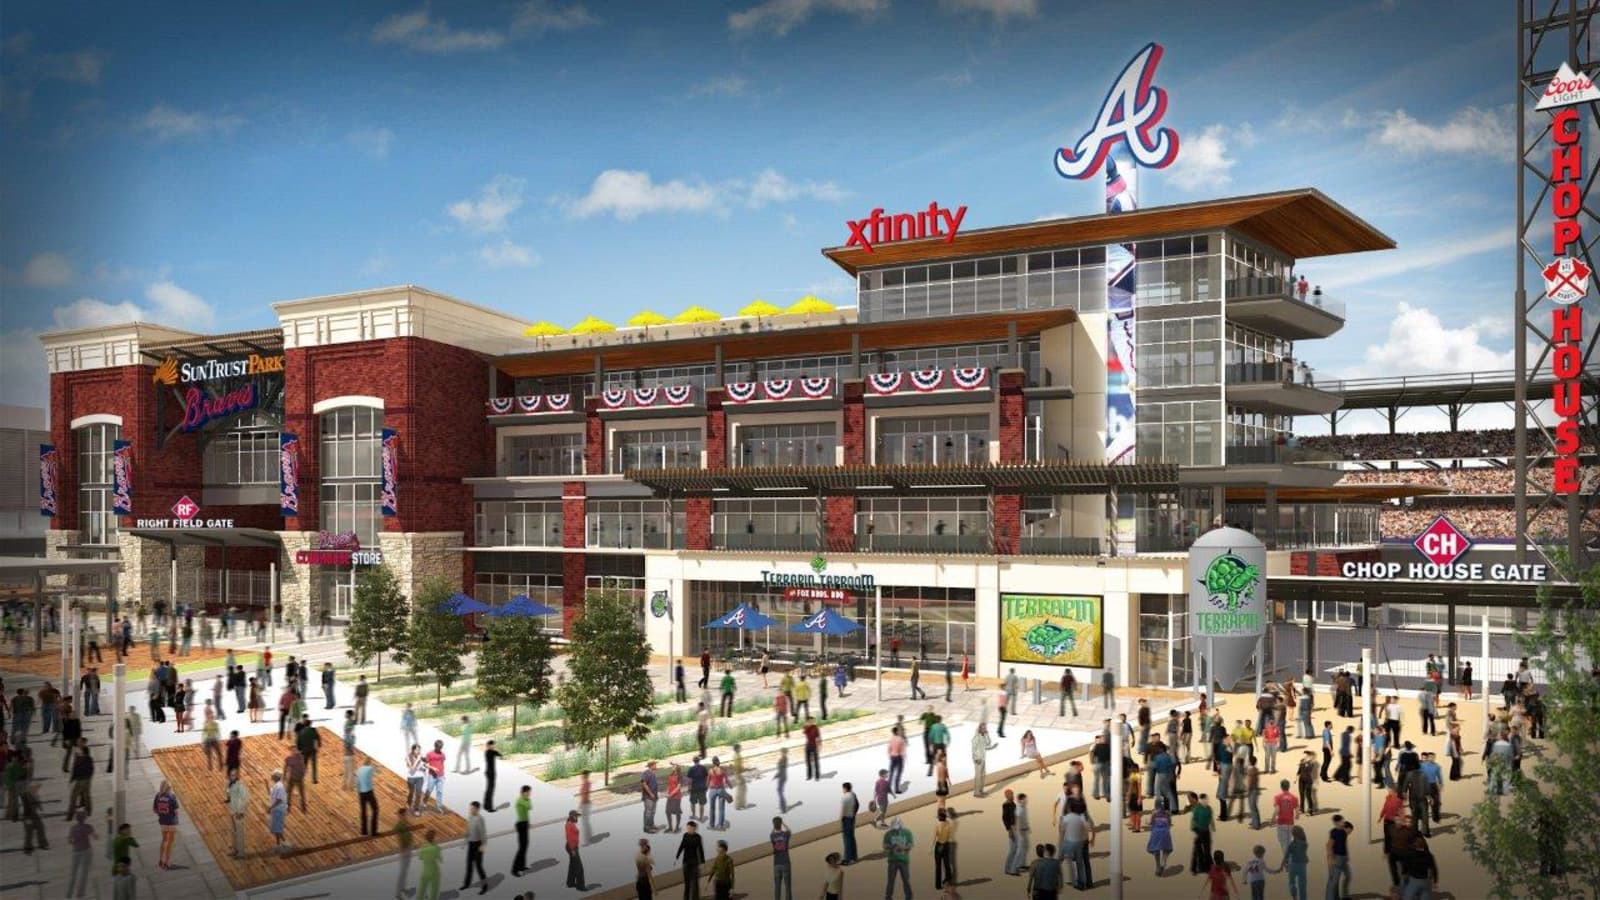 Take a tour through SunTrust Park, the new home of the Atlanta Braves